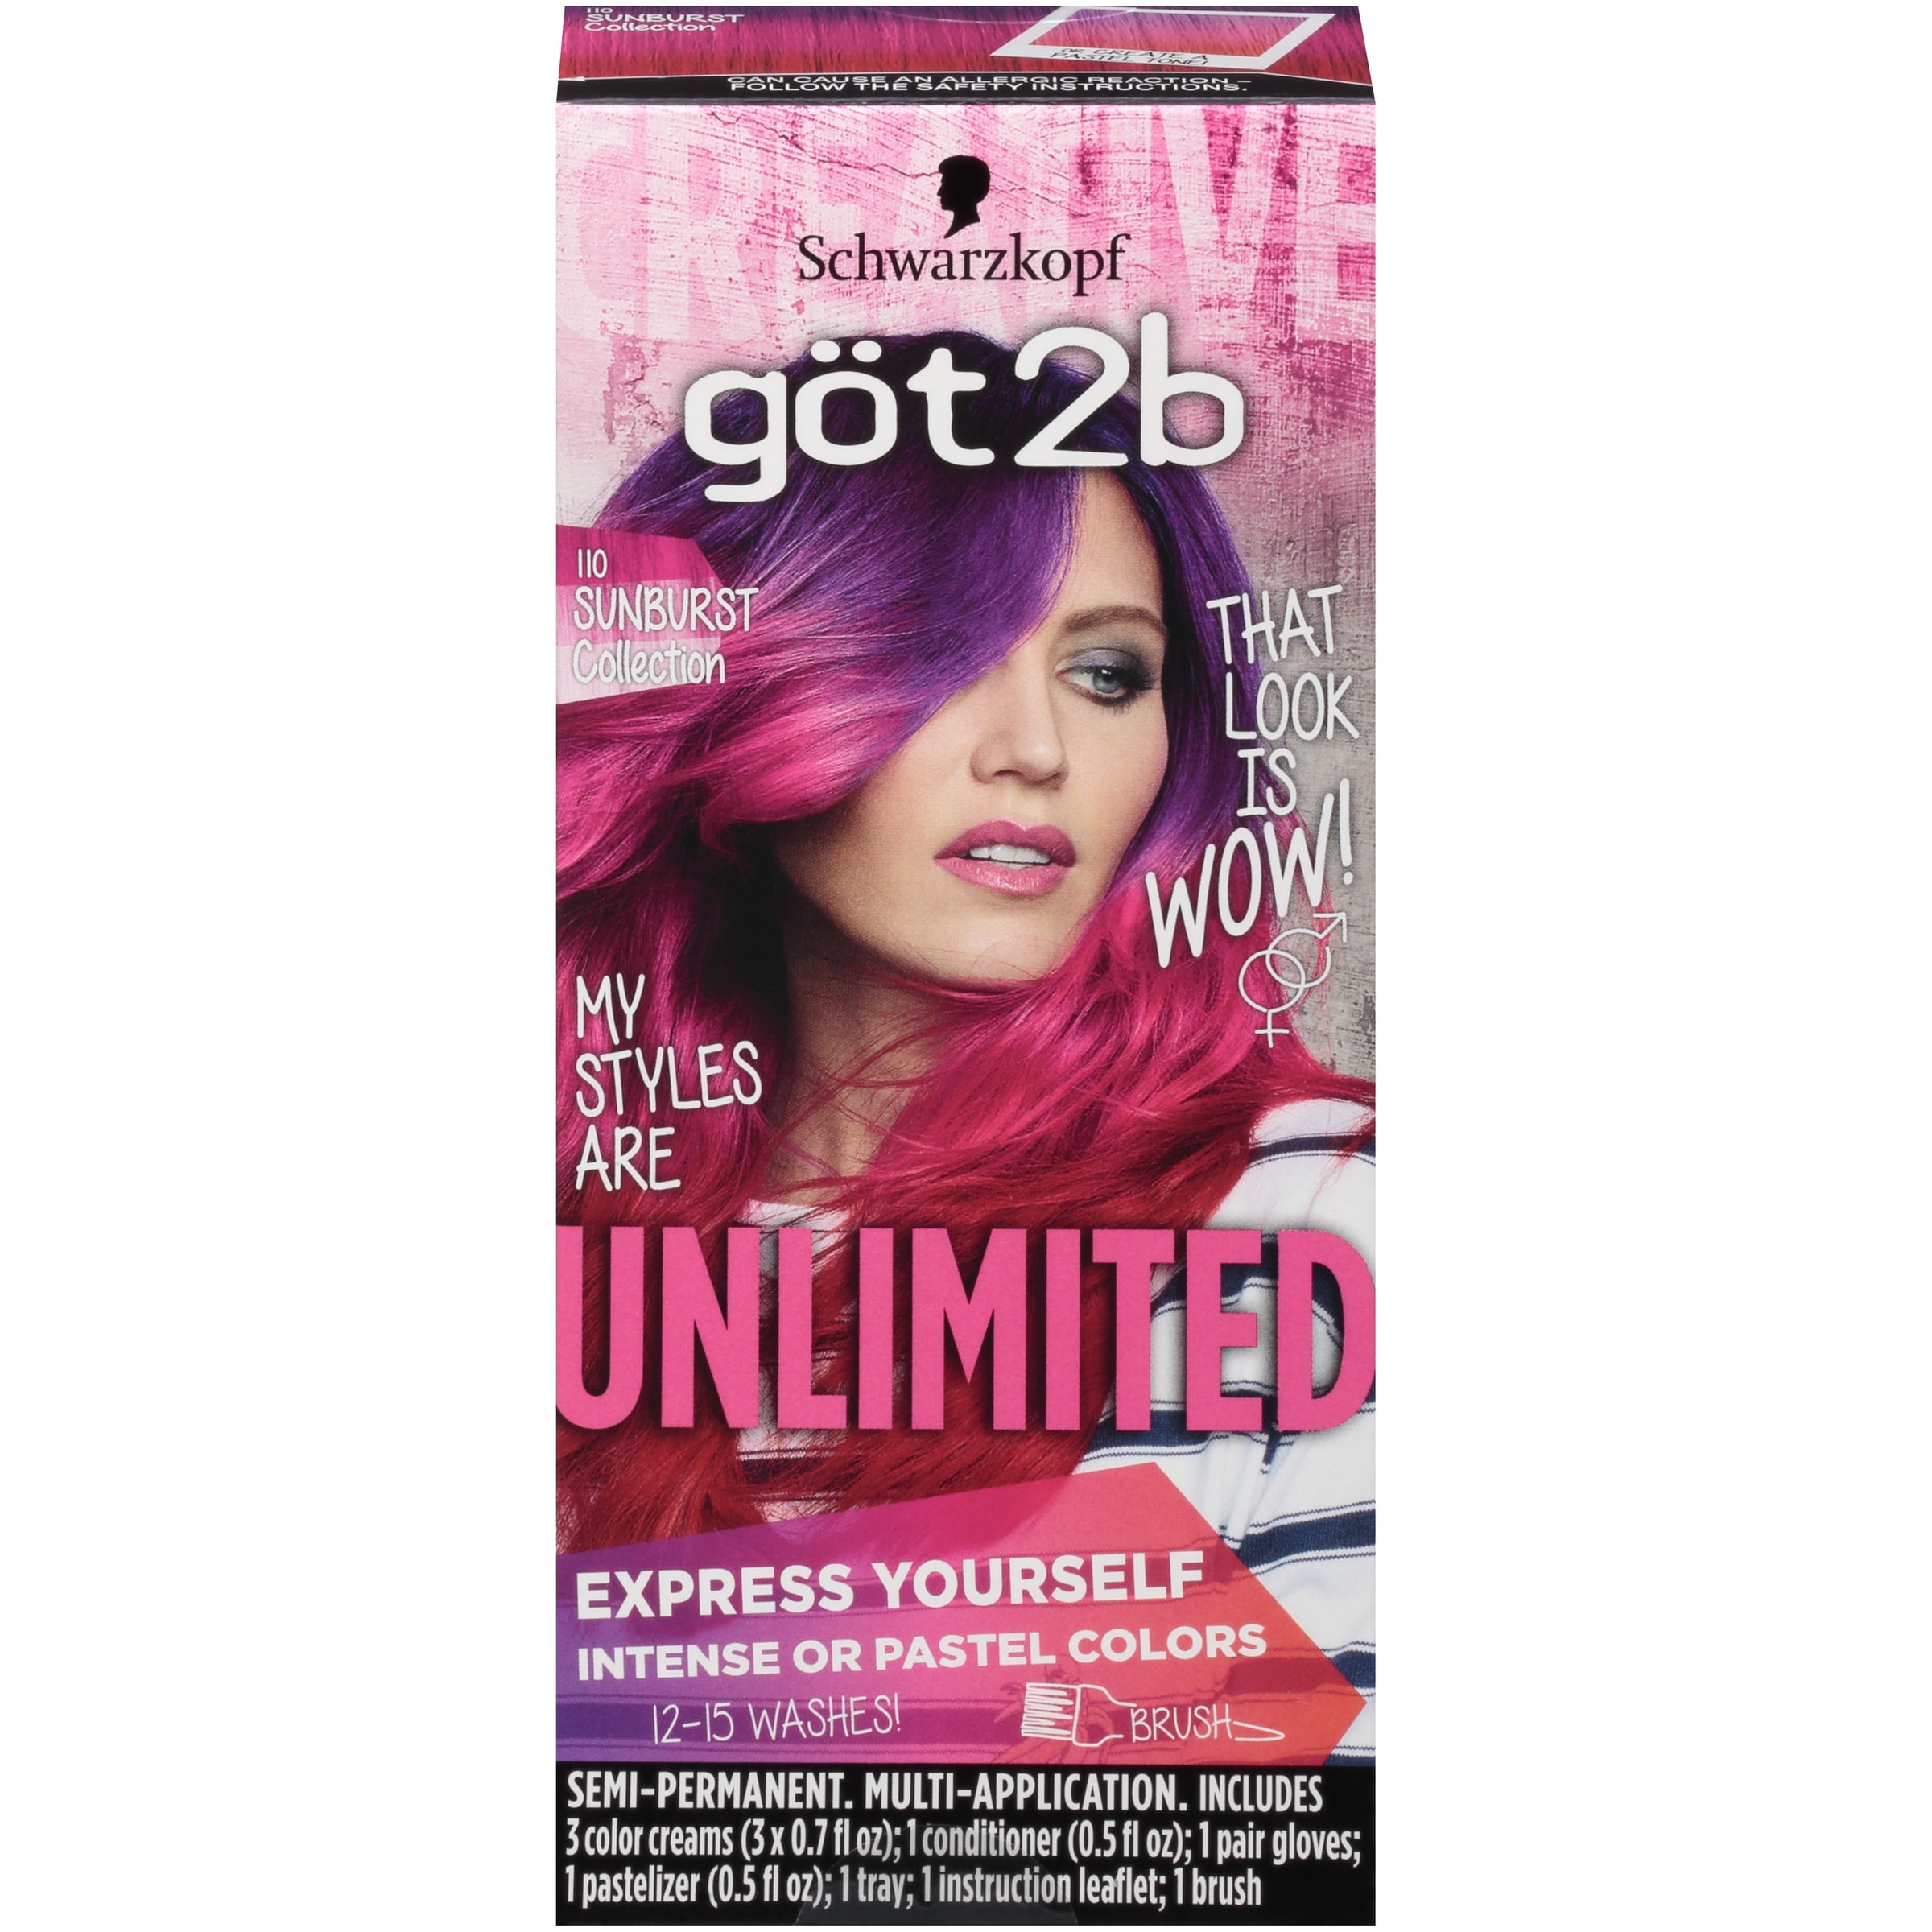 Schwarzkopf Got2b Unlimited Semi-Permanent Hair Color, 110 Sunburst